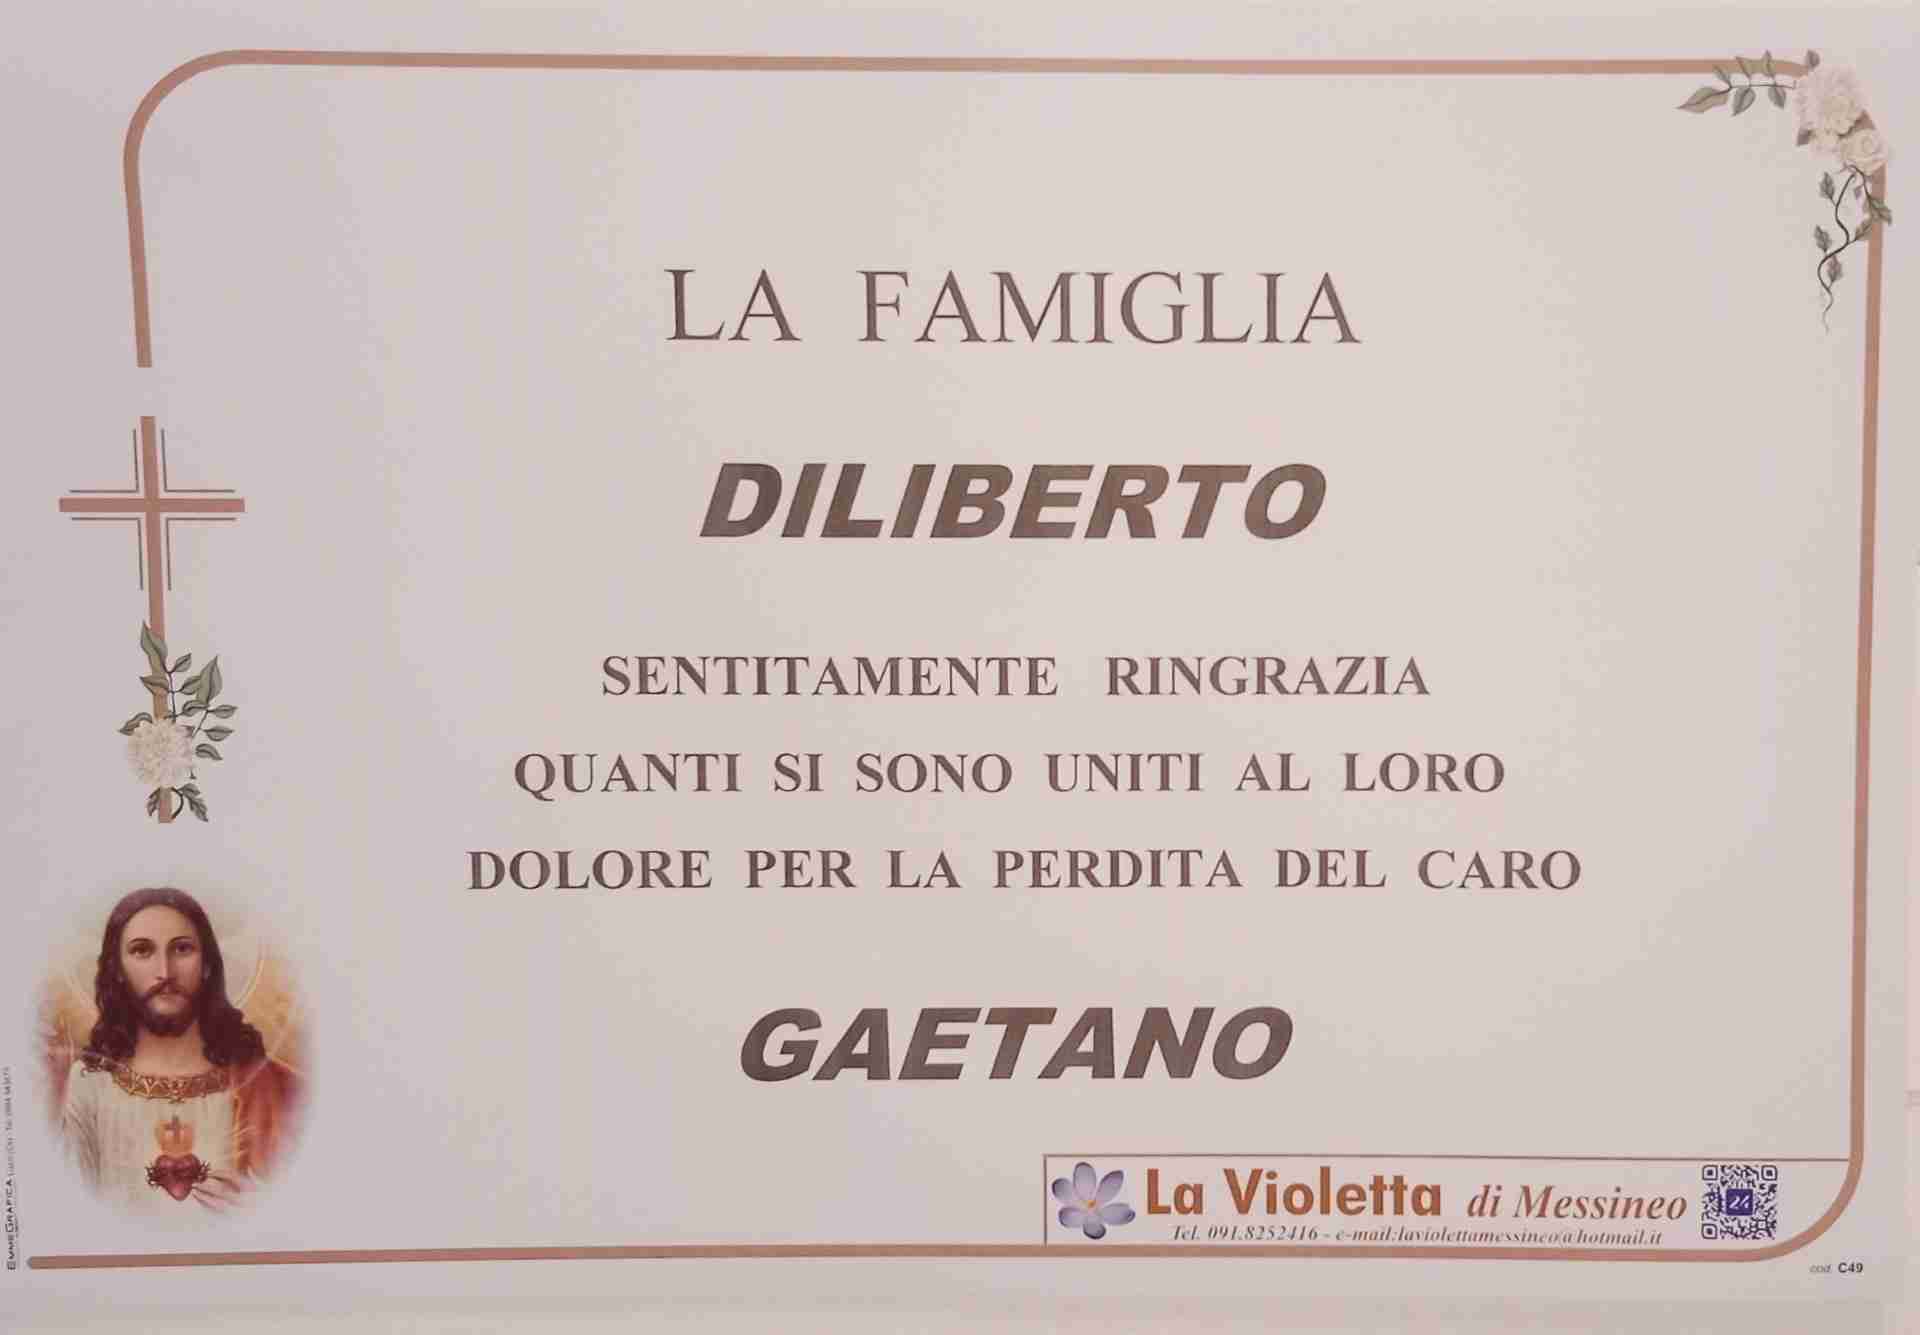 Gaetano Diliberto